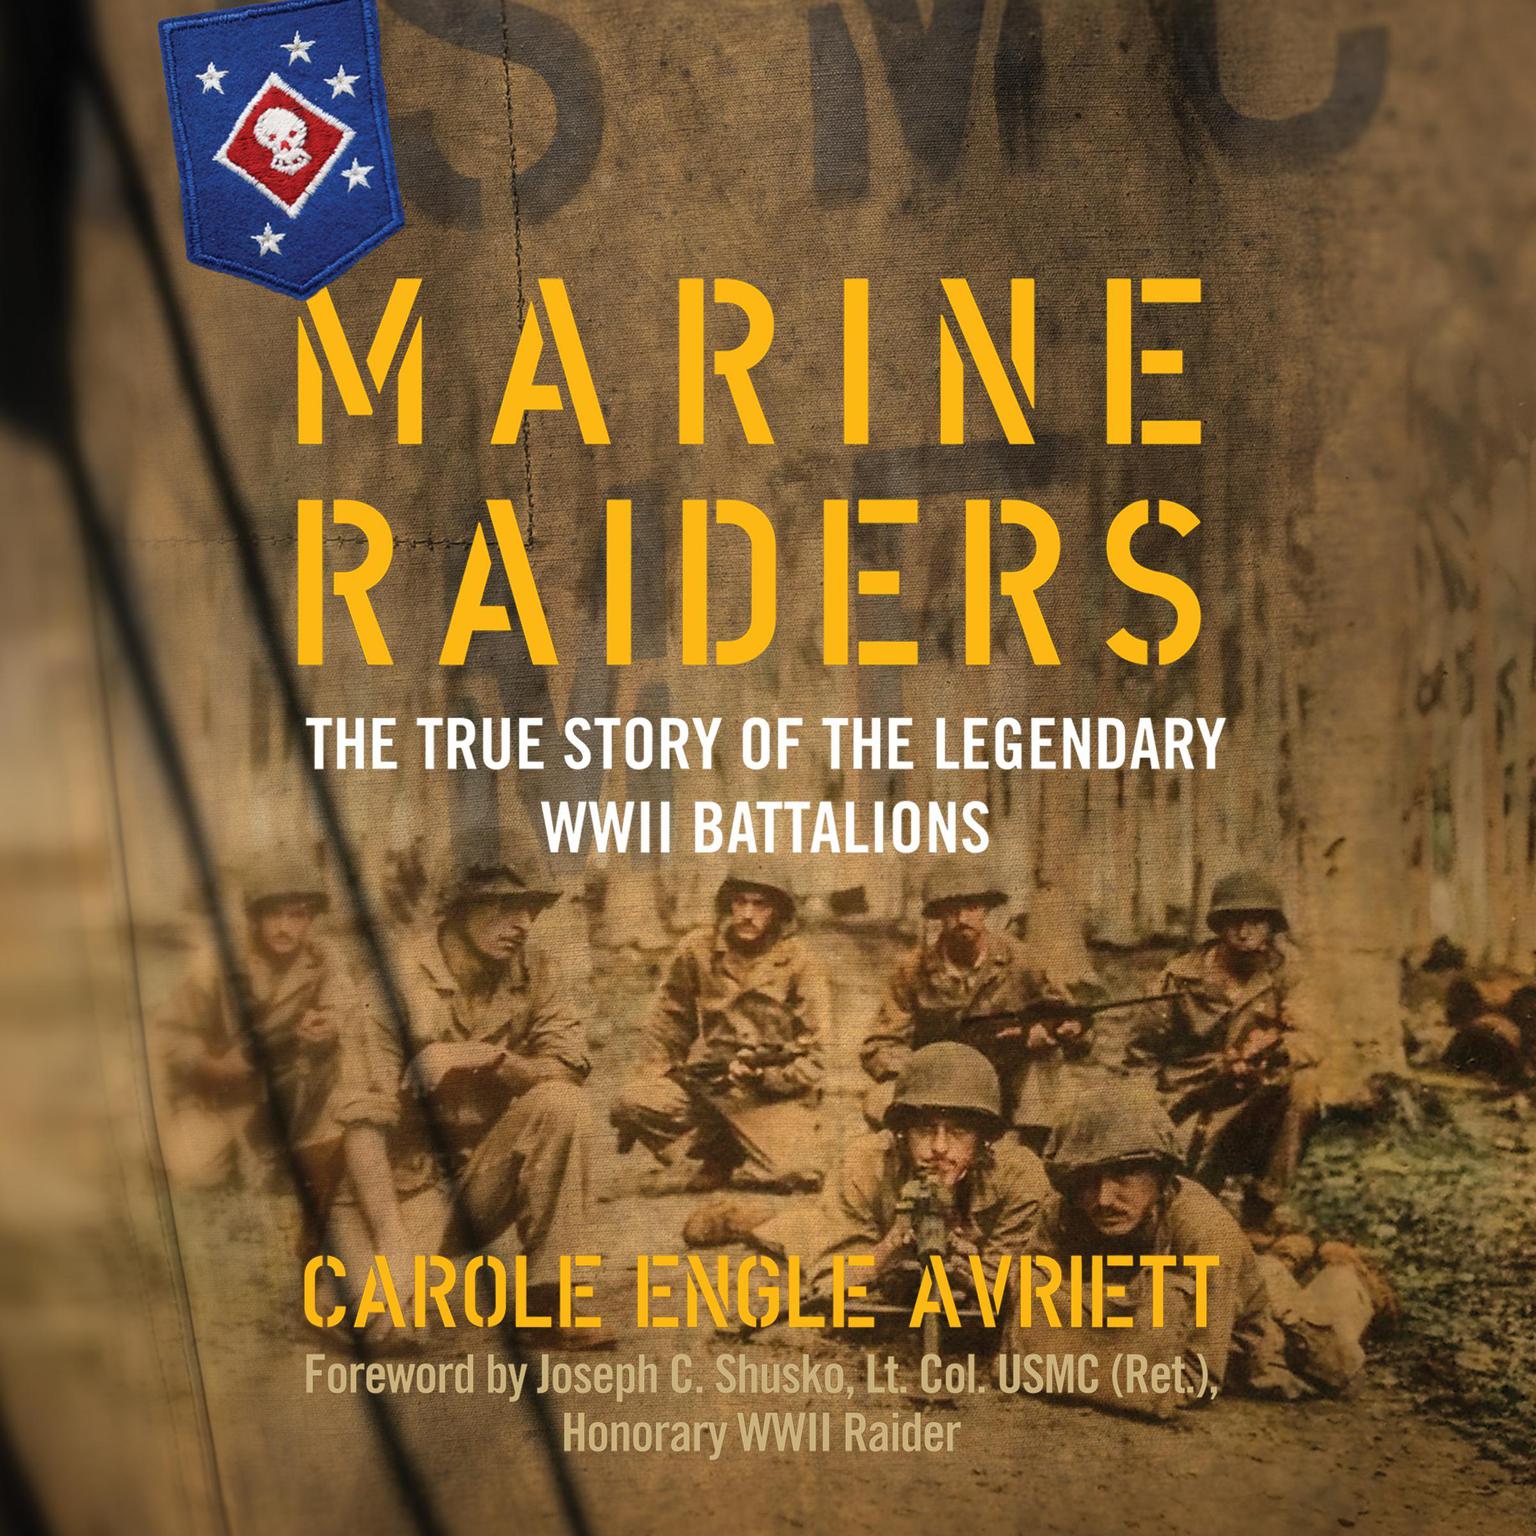 Marine Raiders: The True Story of the Legendary WWII Battalions Audiobook, by Carole Engle Avriett